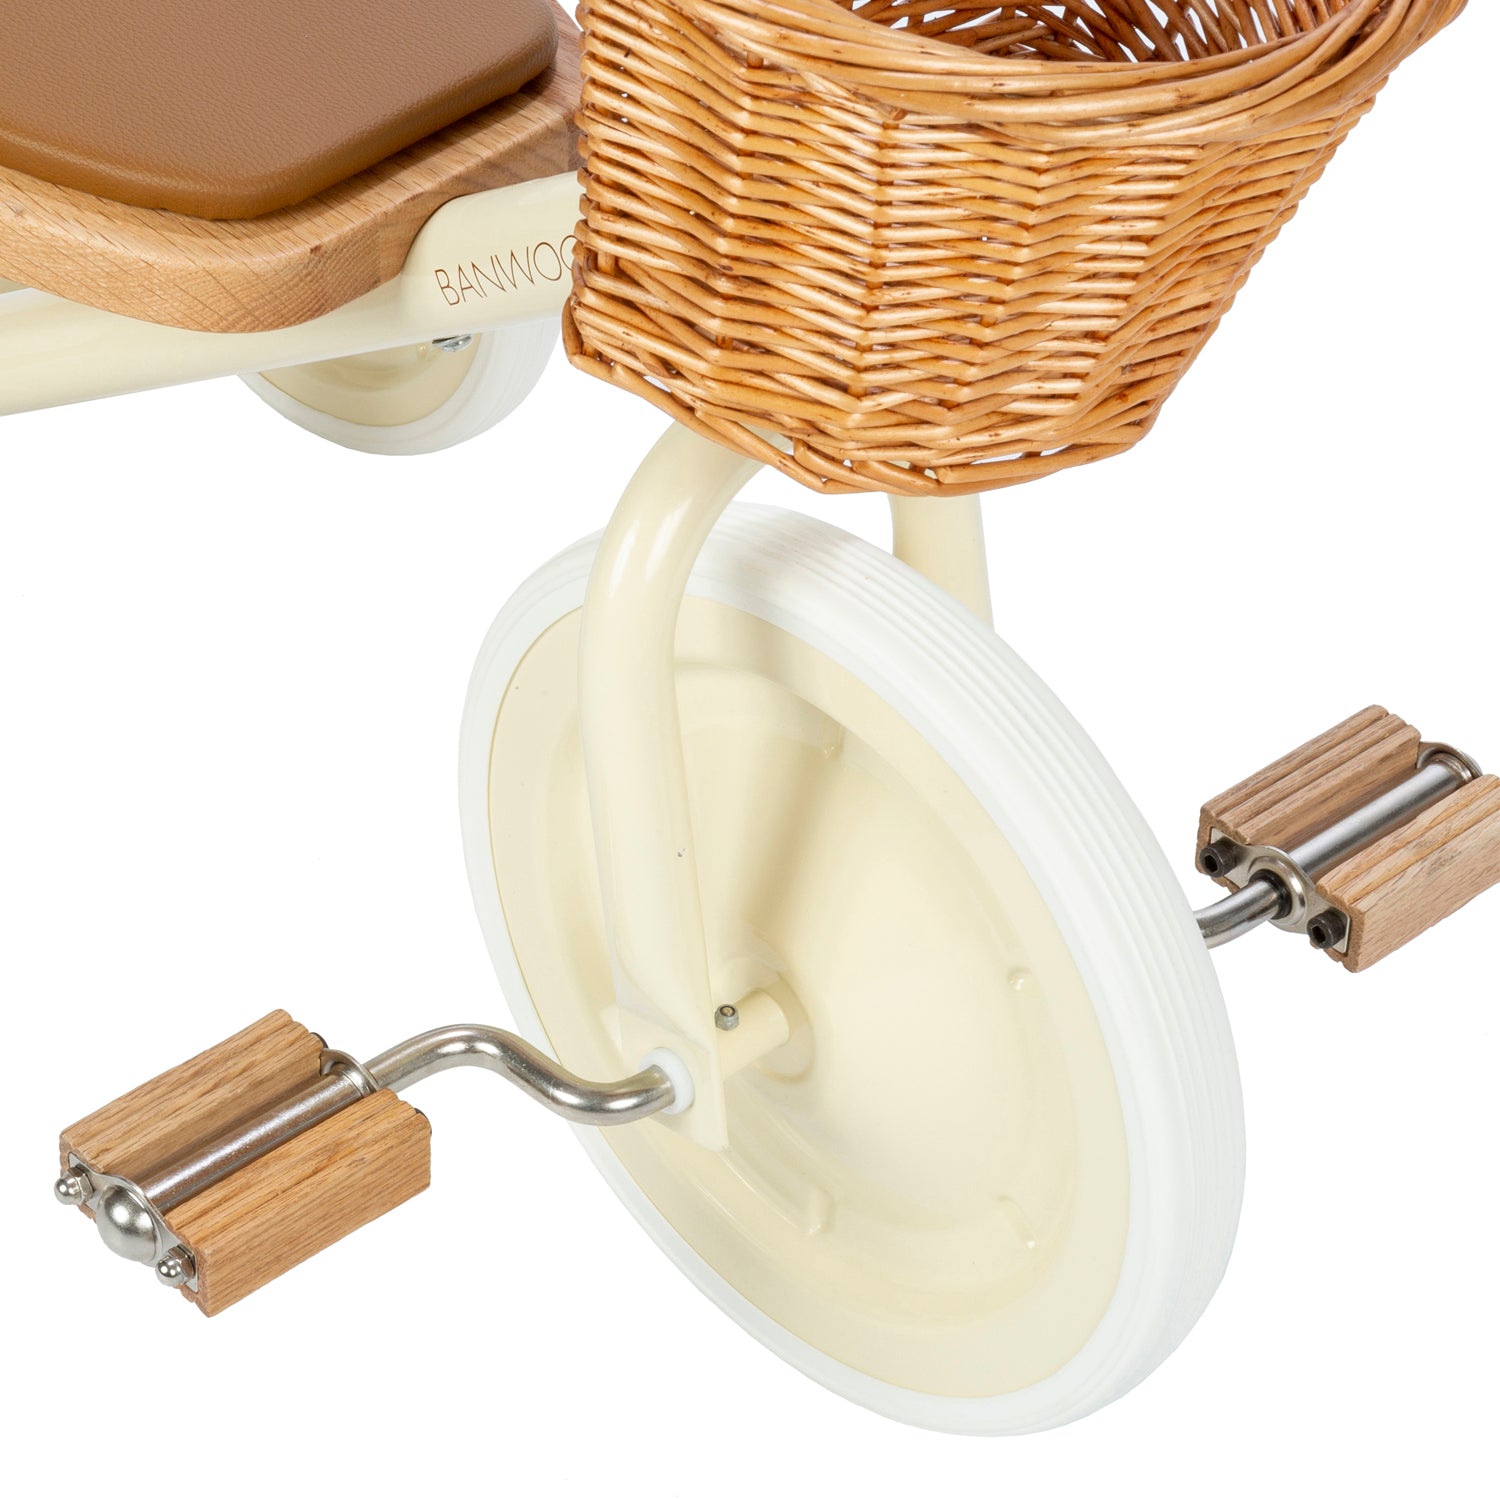 Banwood Trike (and basket)- Cream